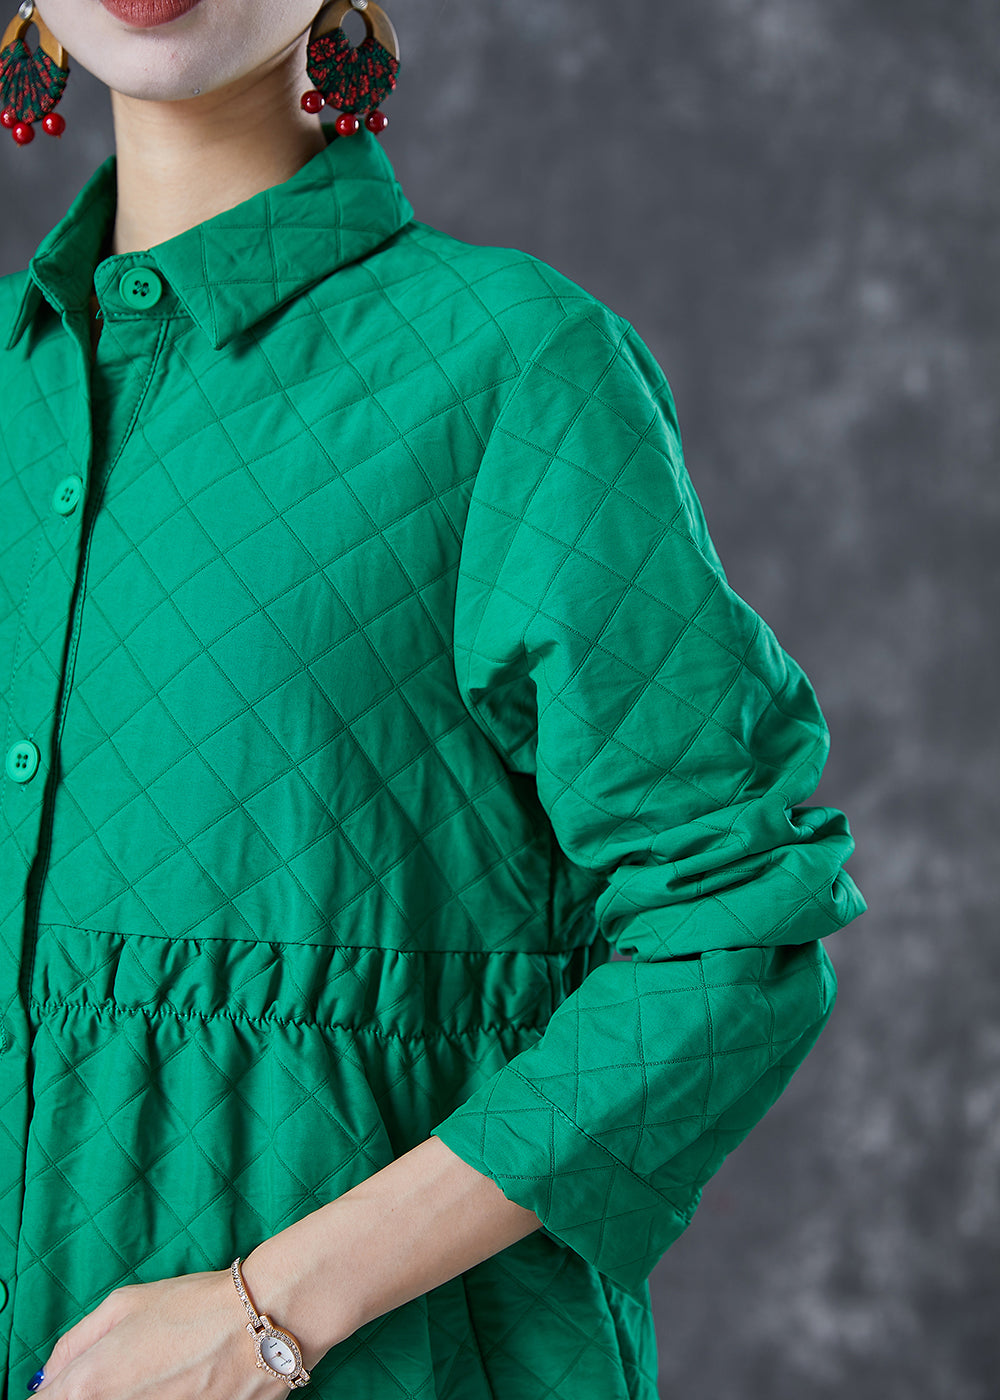 Bohemian Green Peter Pan Collar Plaid Cotton Coat Fall